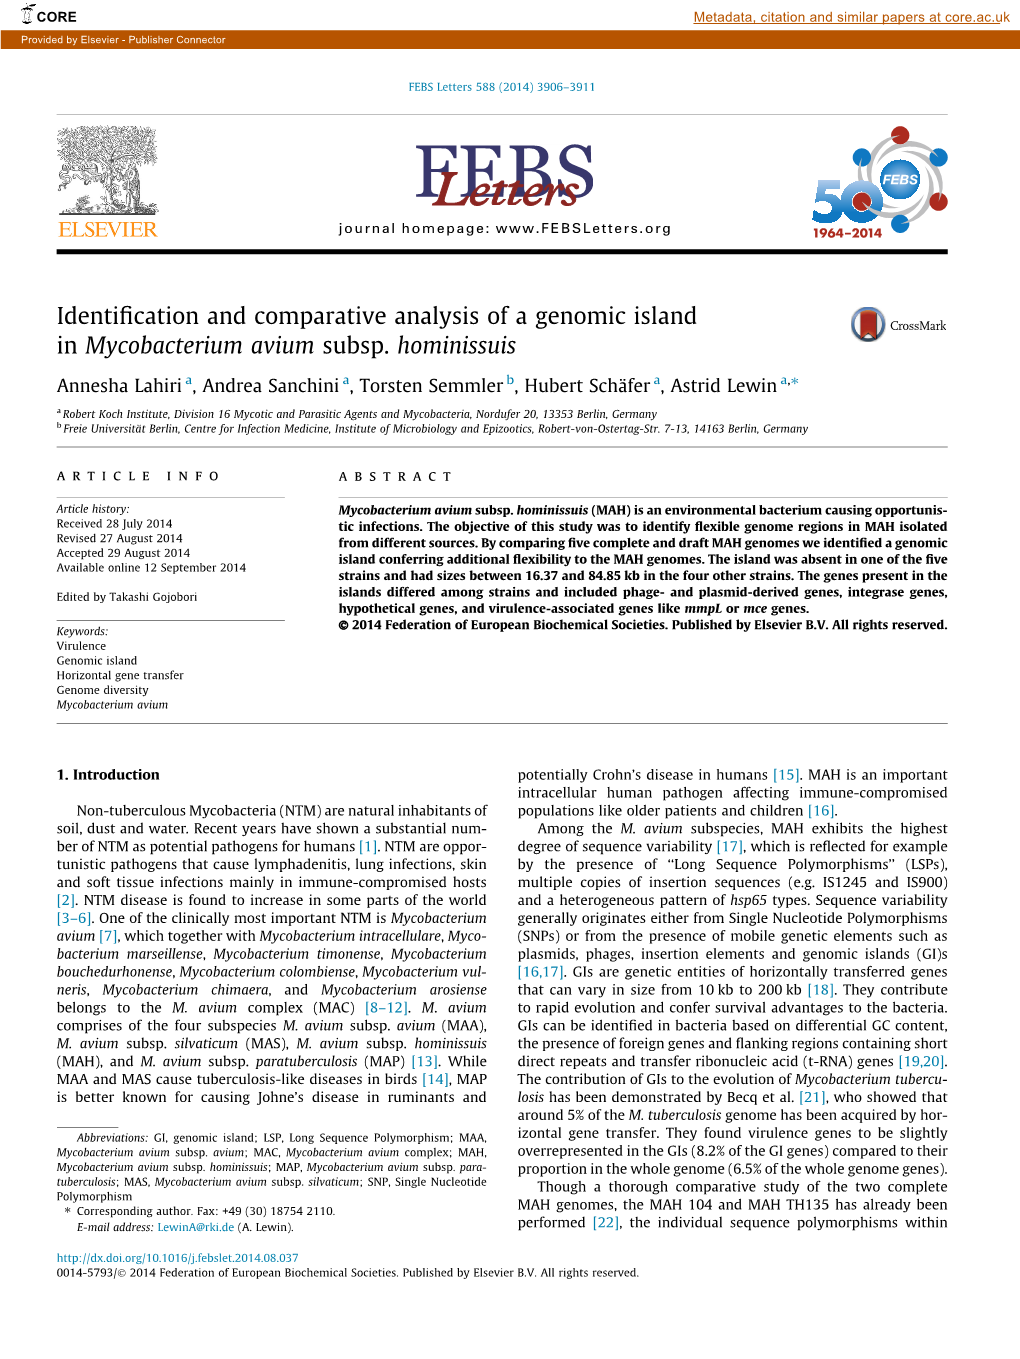 Identification and Comparative Analysis of a Genomic Island in Mycobacterium Avium Subsp. Hominissuis